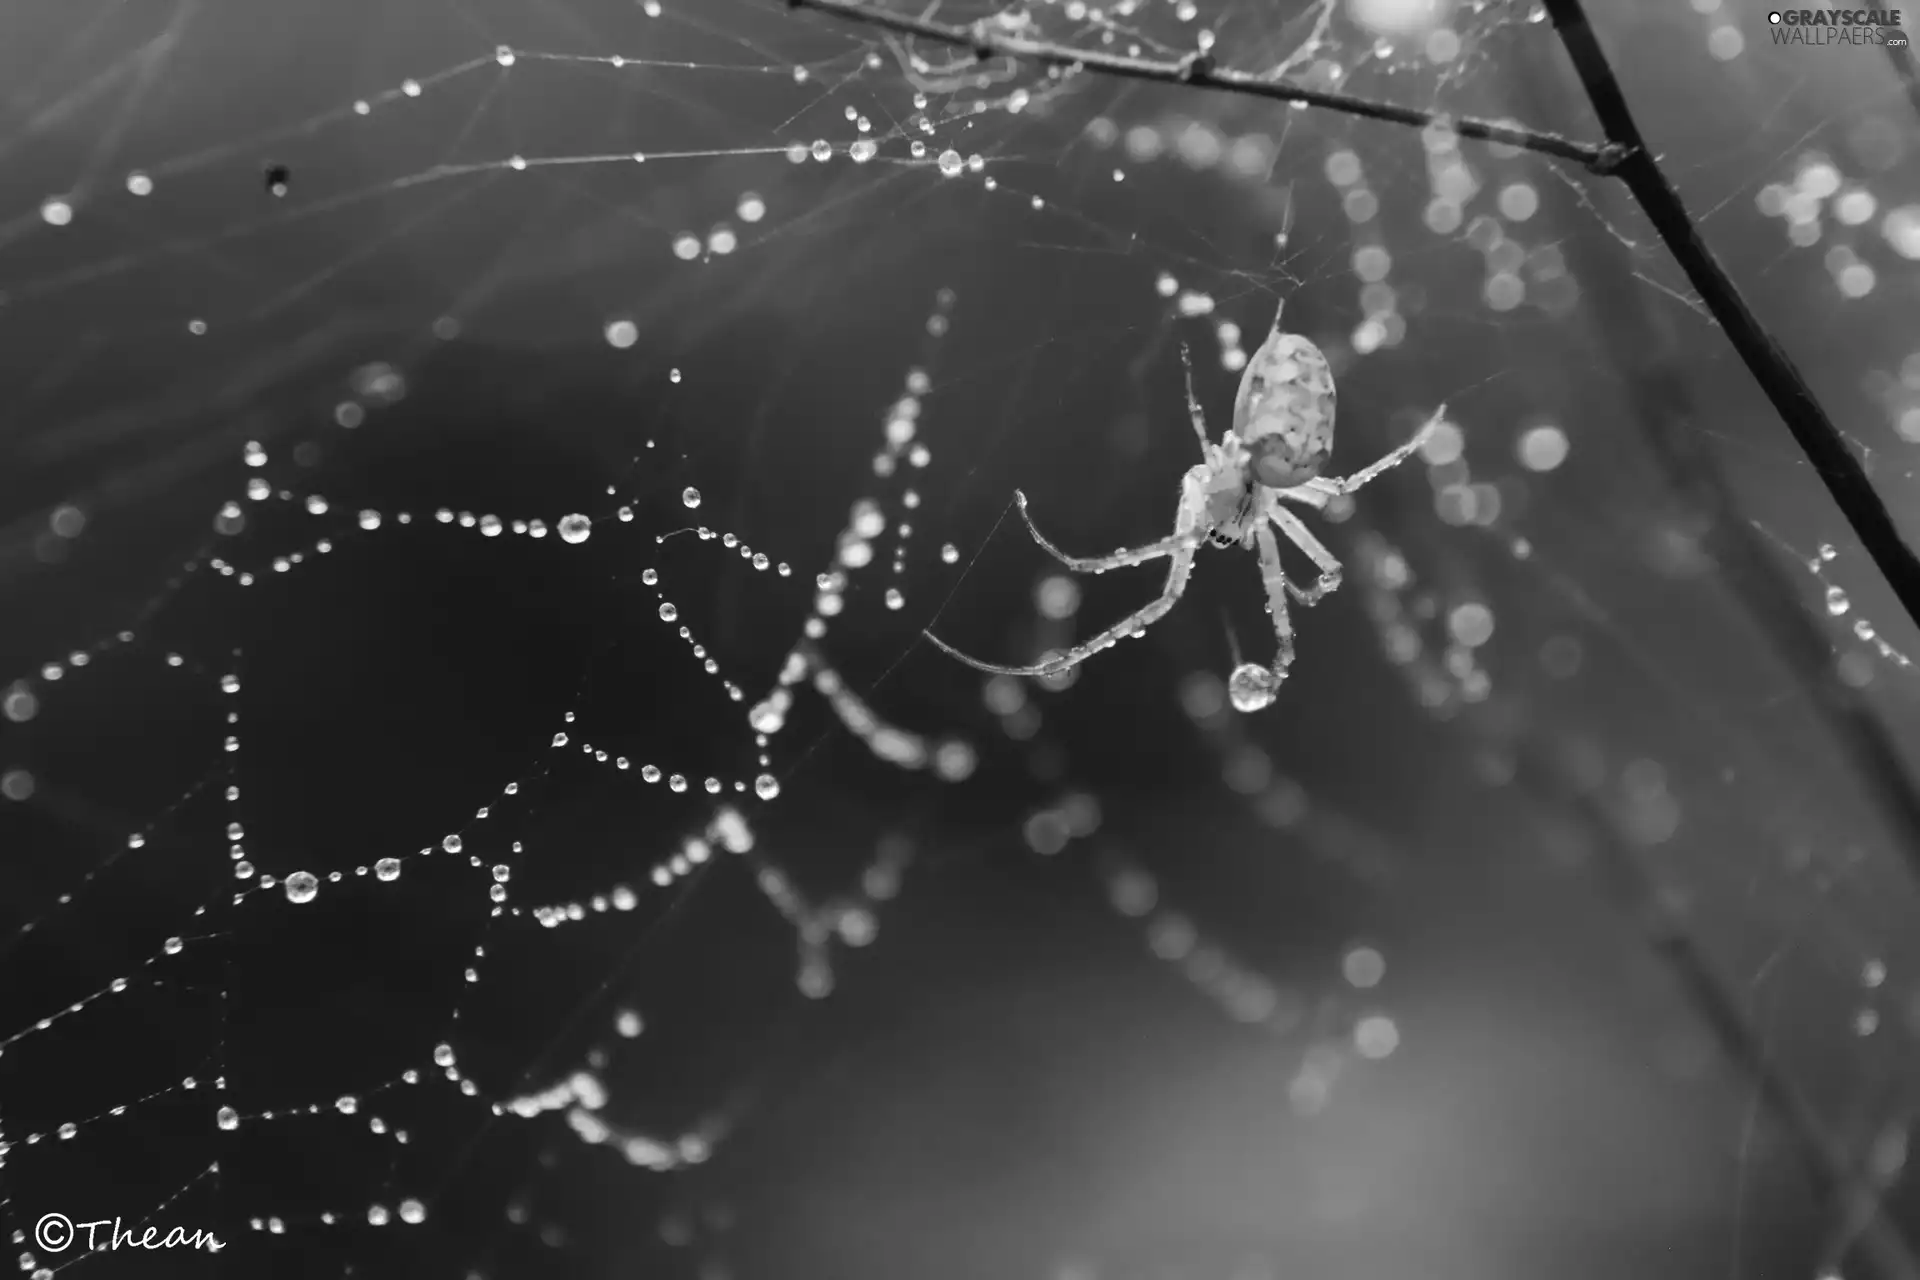 Spider, Web, droplets, net